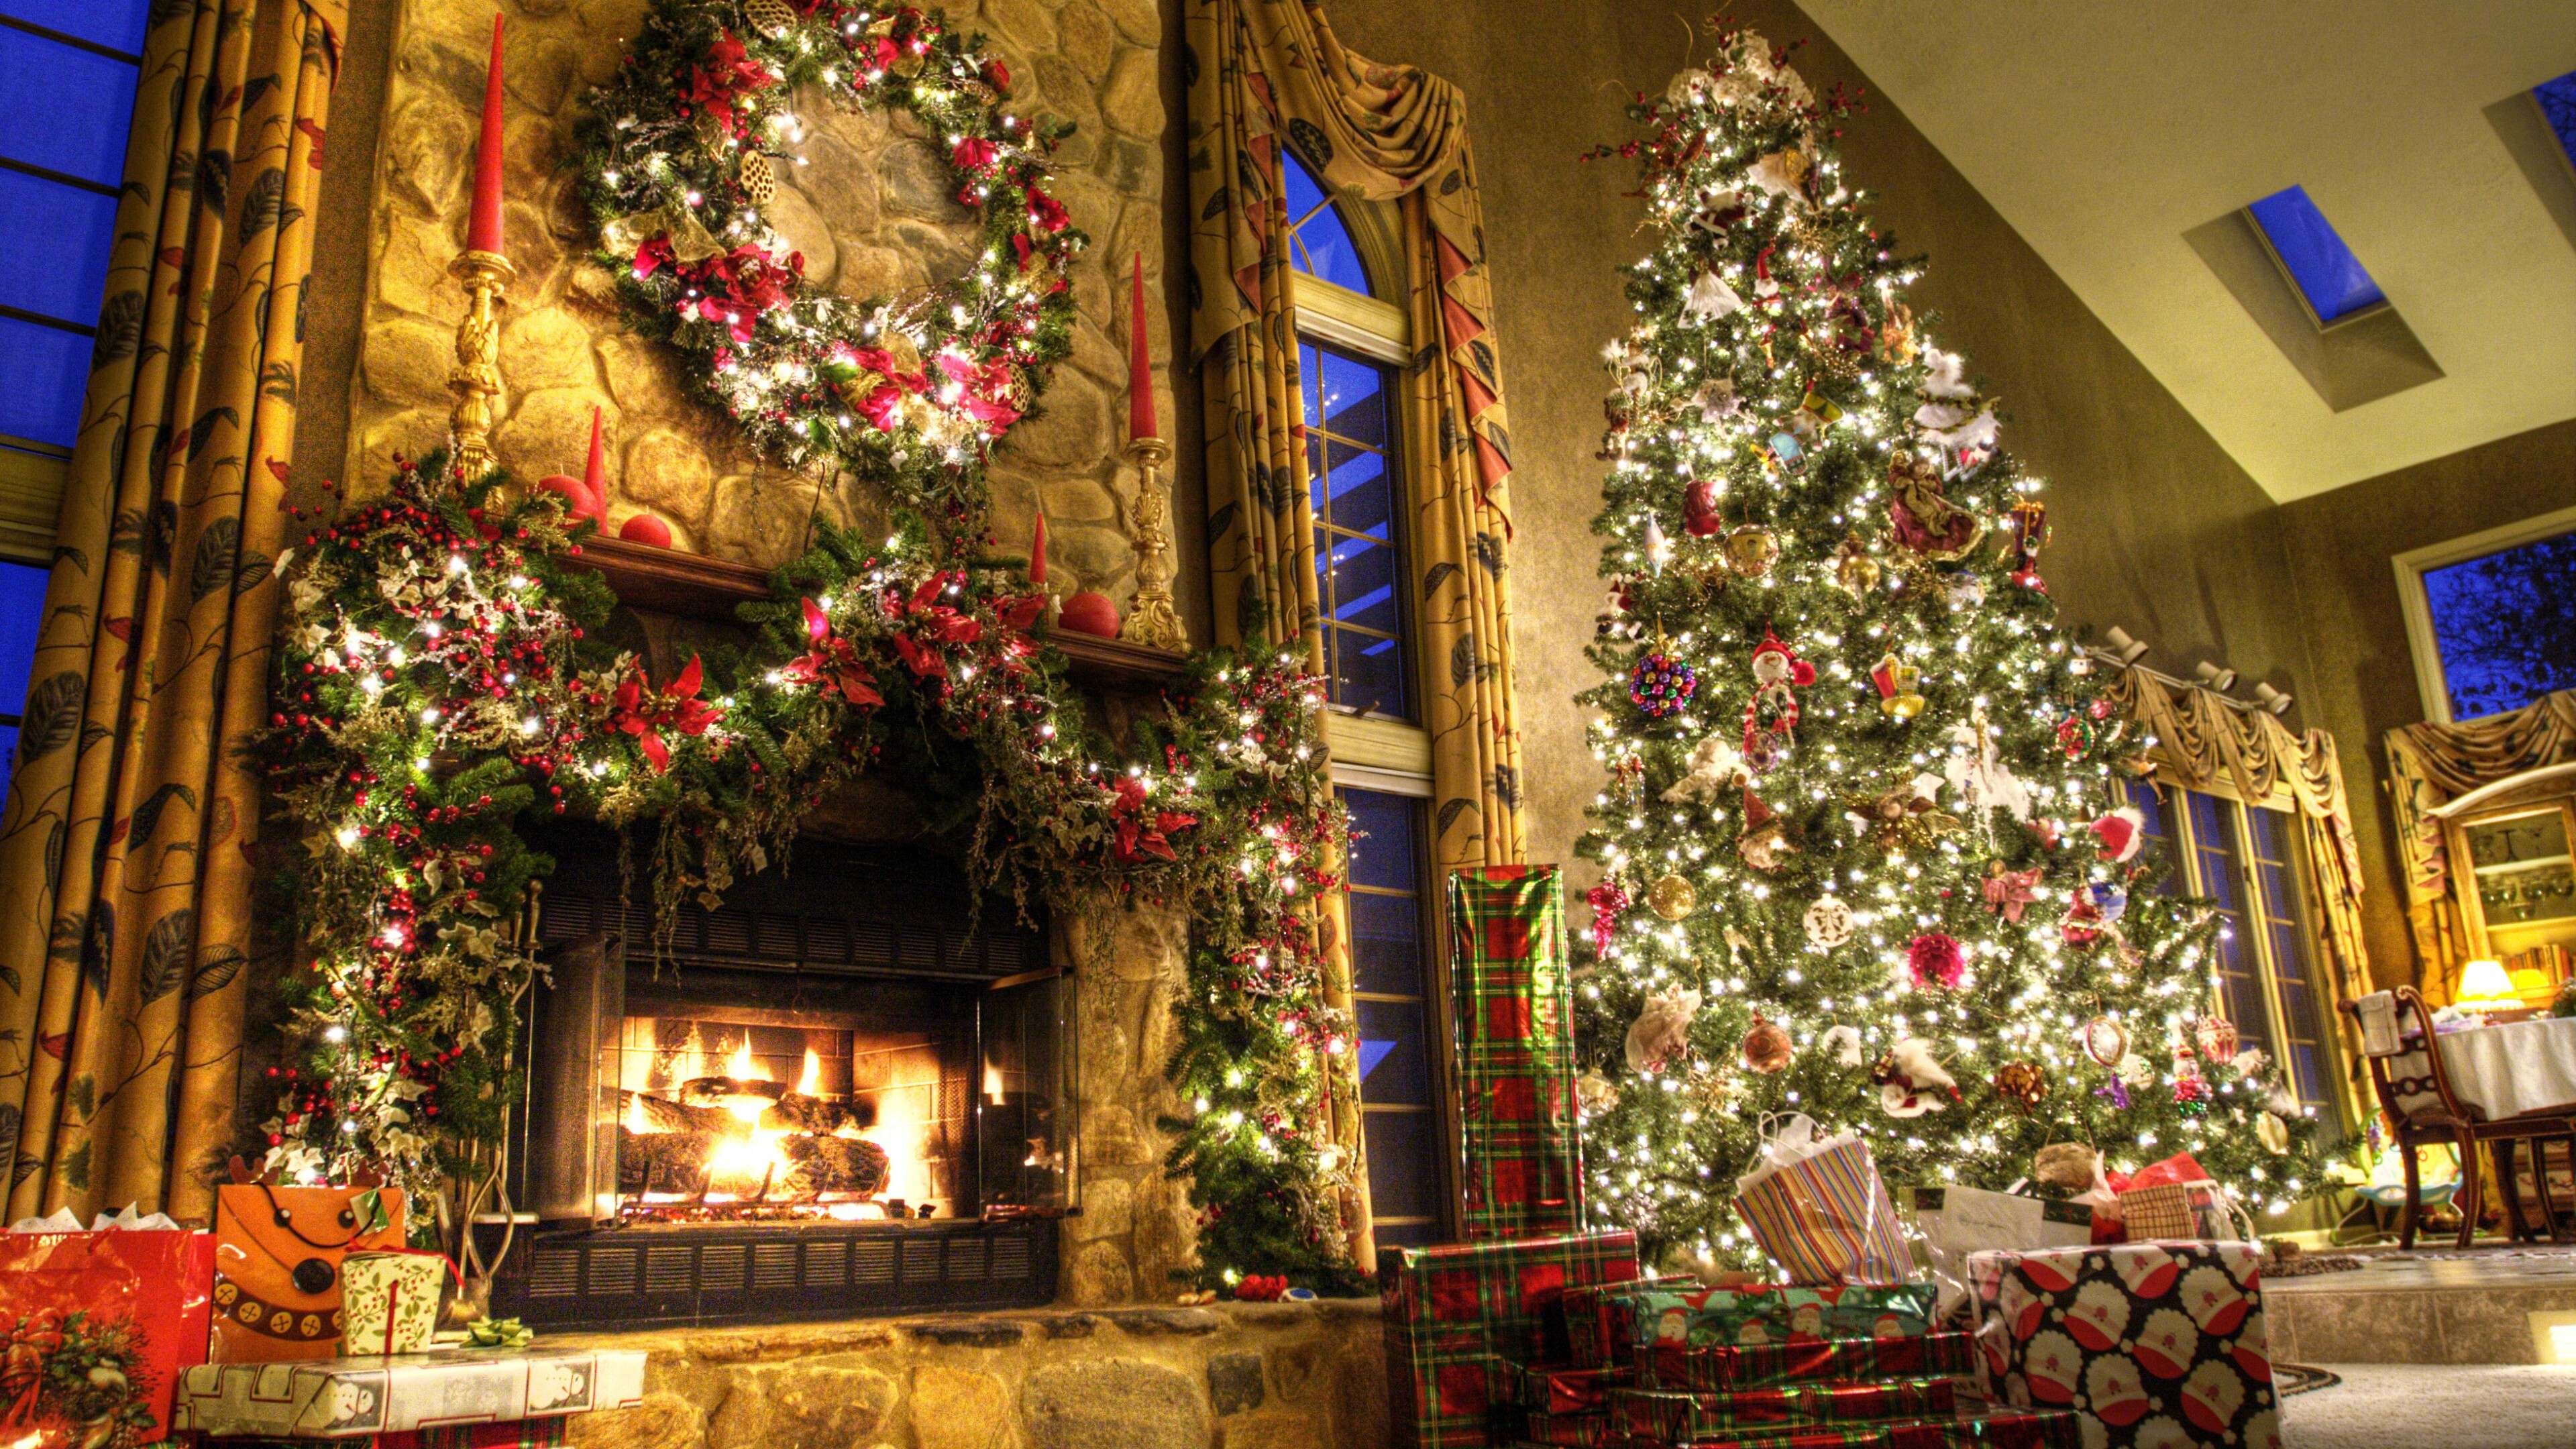 Christmas Fireplace: New Year, Decor, Fir-tree, Fire, Lights, Room, Gifts. 3840x2160 4K Background.